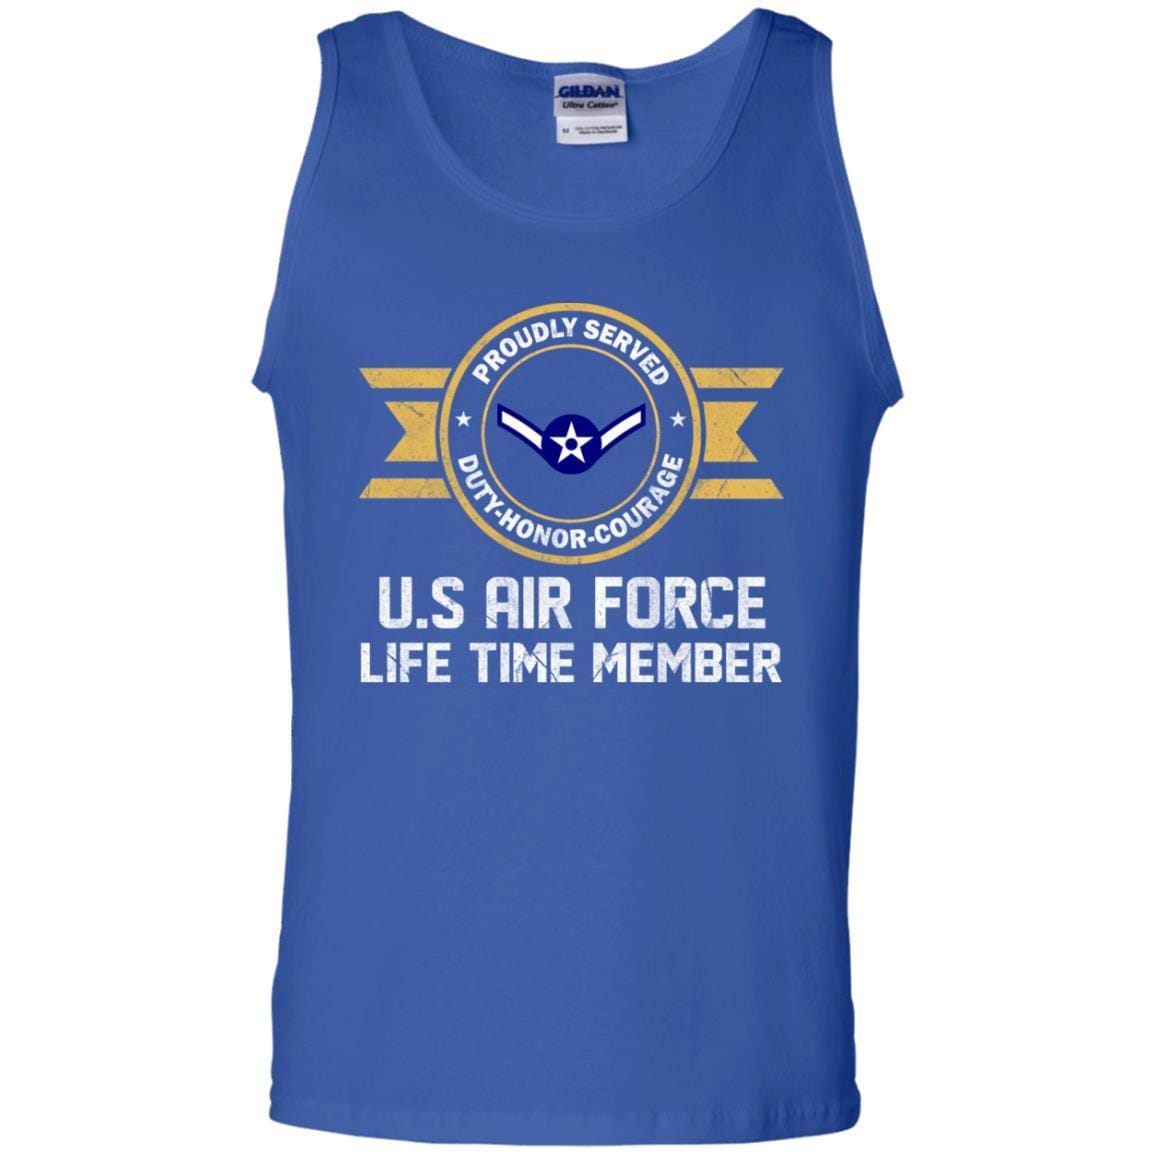 Life time member-US Air Force E-2 Airman Amn E2 Ranks Enlisted Airman Rank Men T Shirt On Front-TShirt-USAF-Veterans Nation